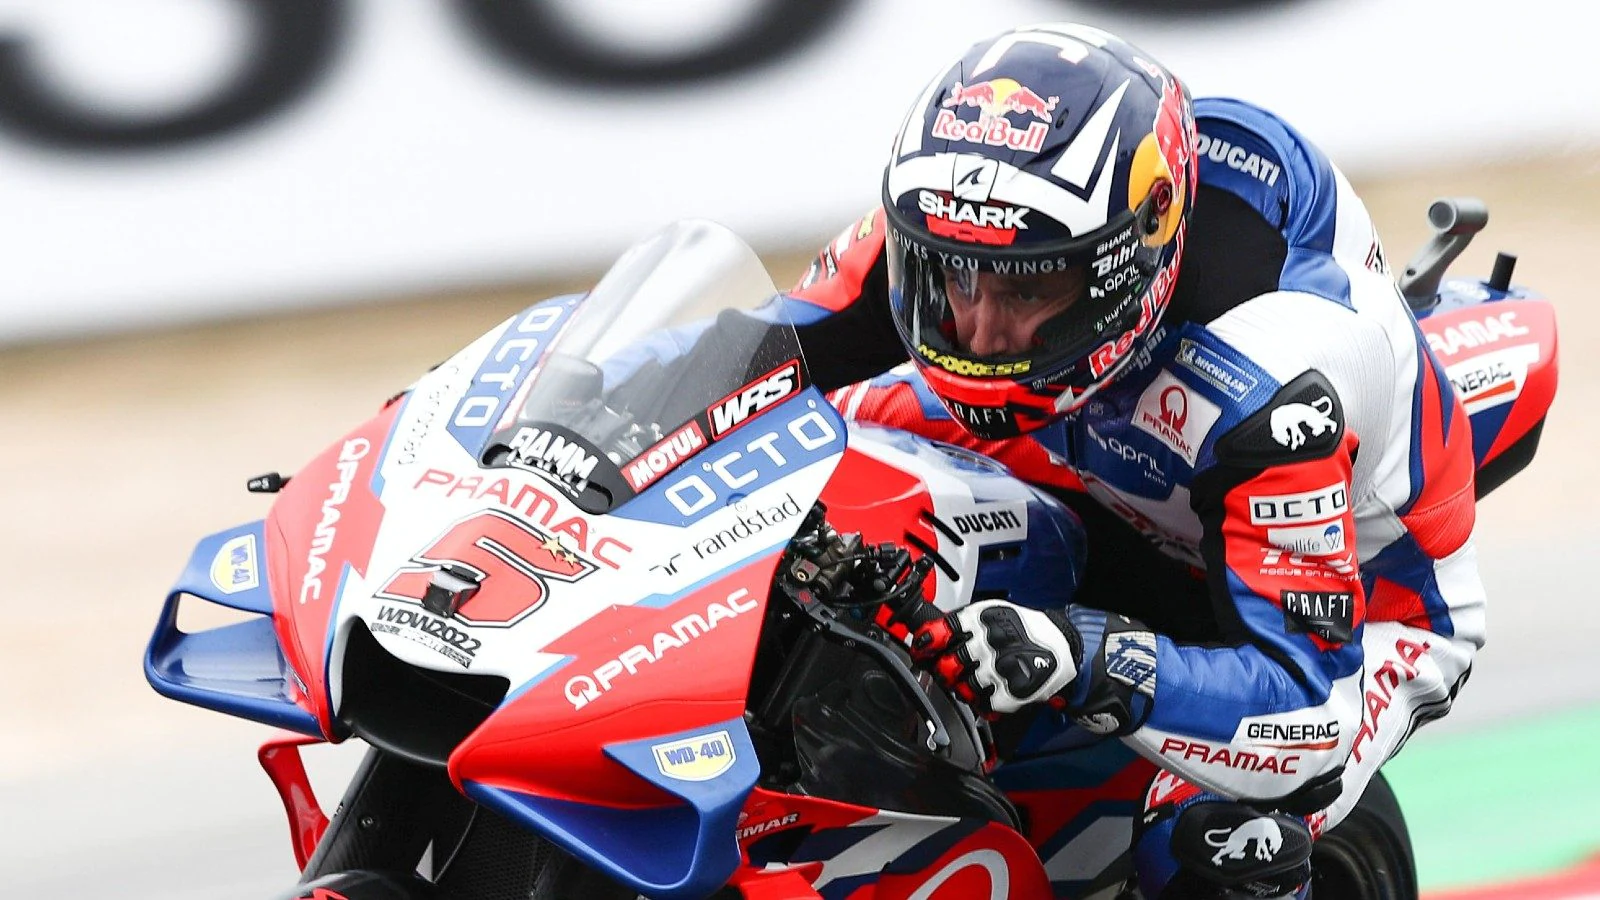 Zarco Takes Top Position at MotoGP Thailand Grand Prix 2022